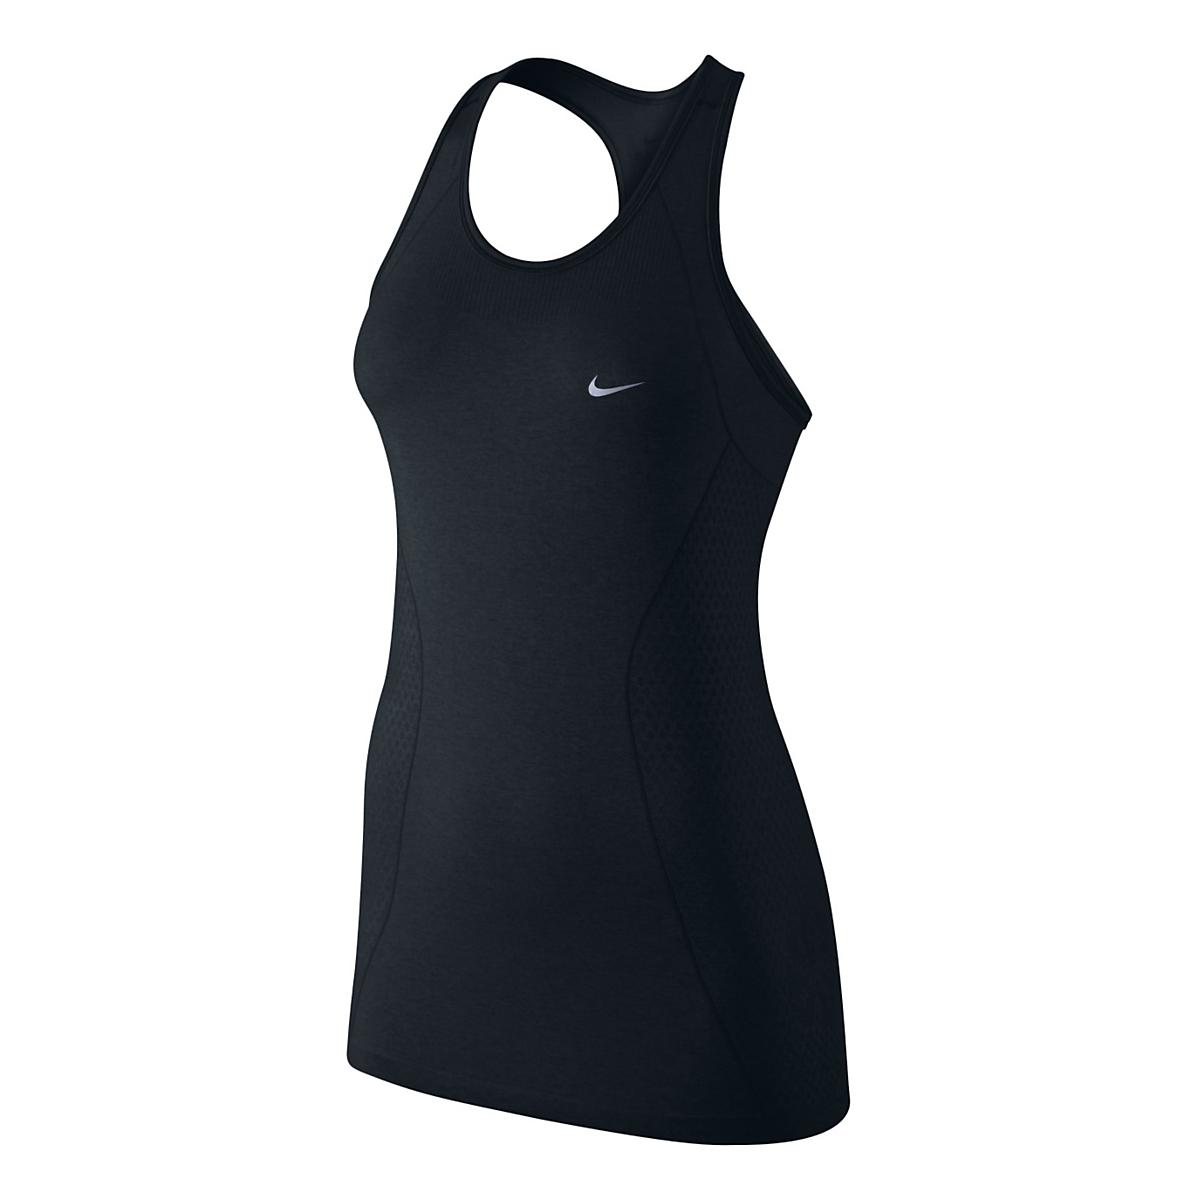 Womens Nike Dri-Fit Knit Tank Technical Tops at Road Runner Sports